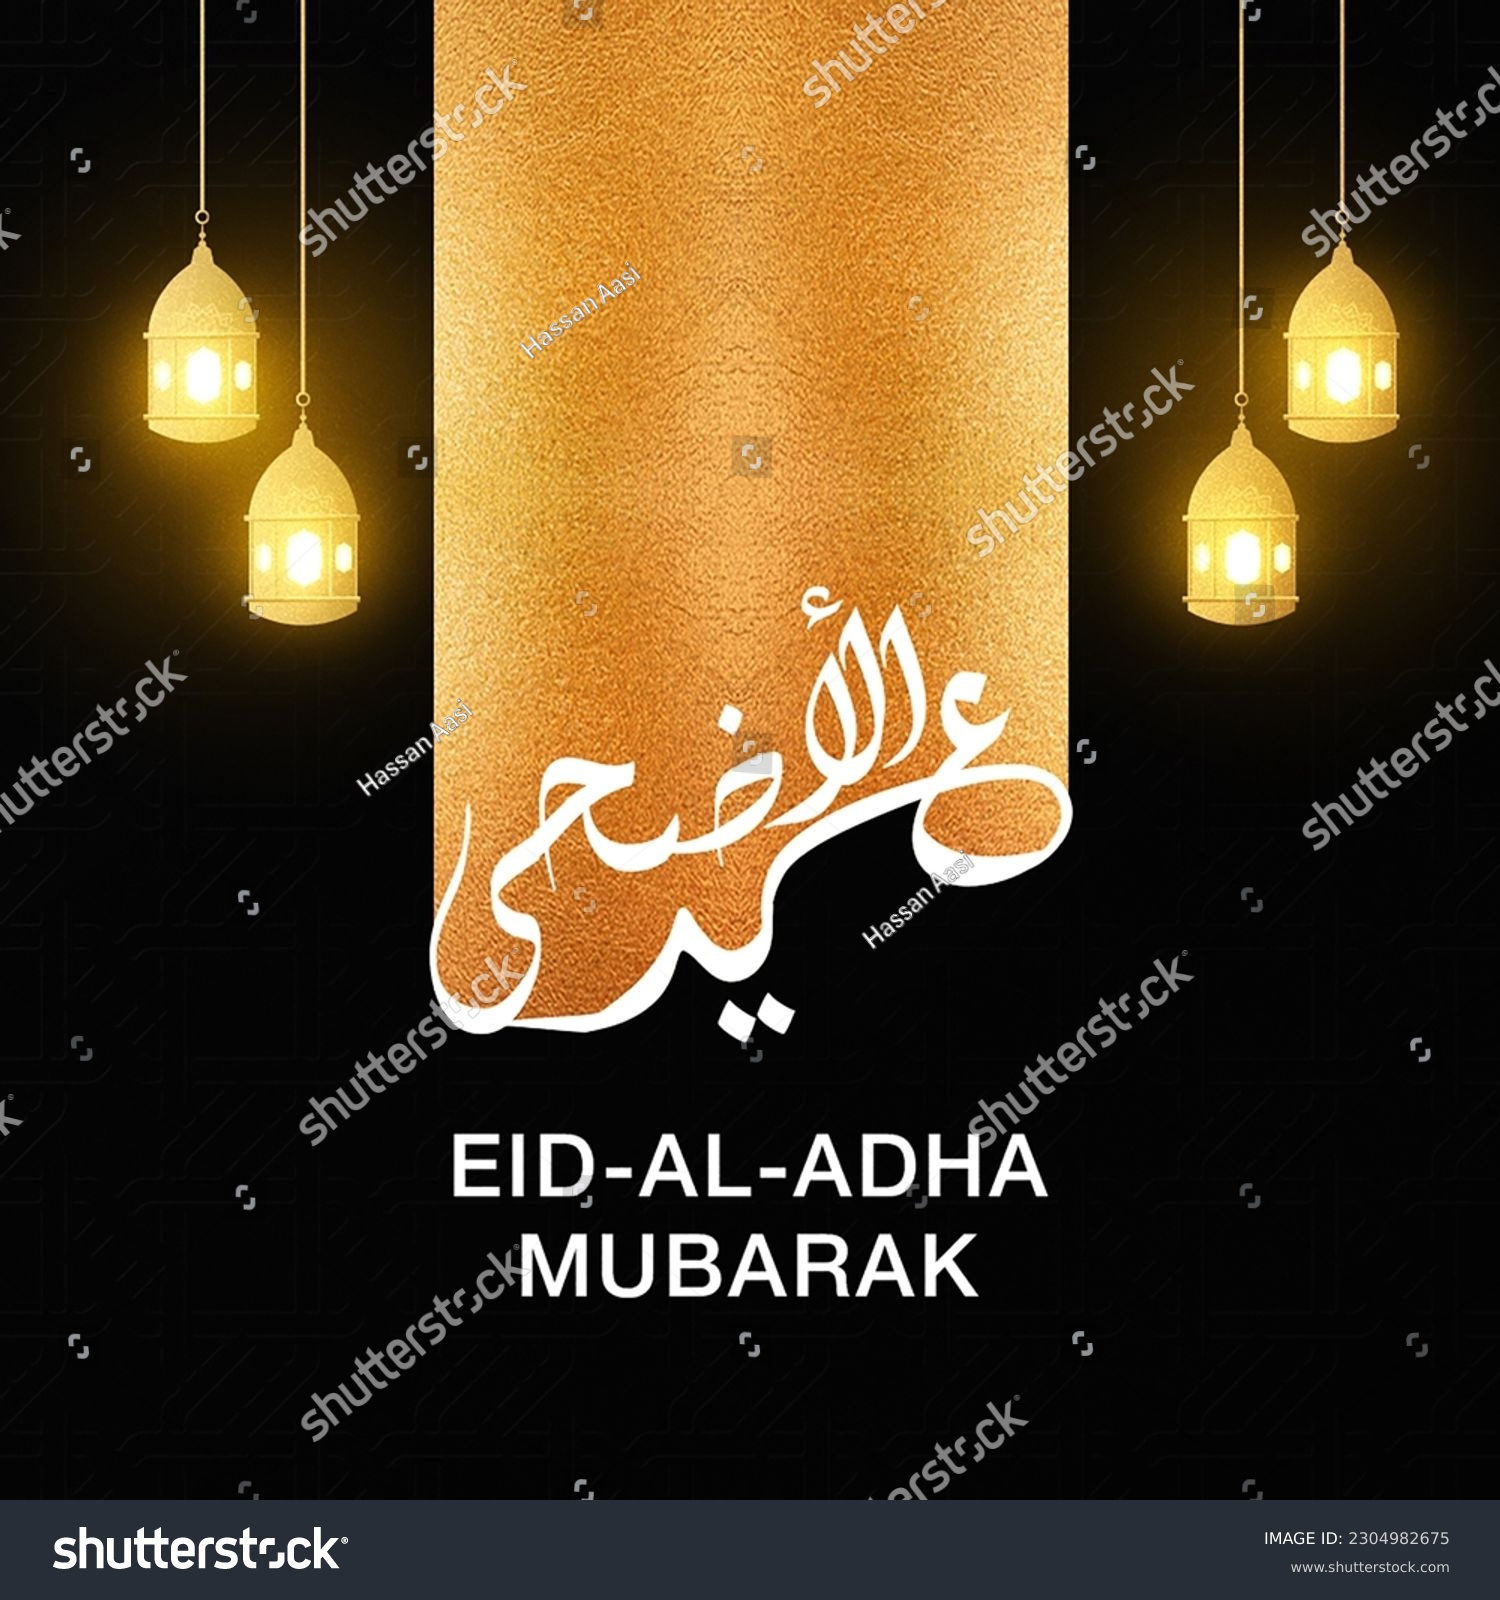 Eid Al Adha Mubarak gold greeting design - Islamic beautiful background with moon and golden text - Eid Al Adha, Eid Mubarak. Islamic Typography for Muslim community #2304982675